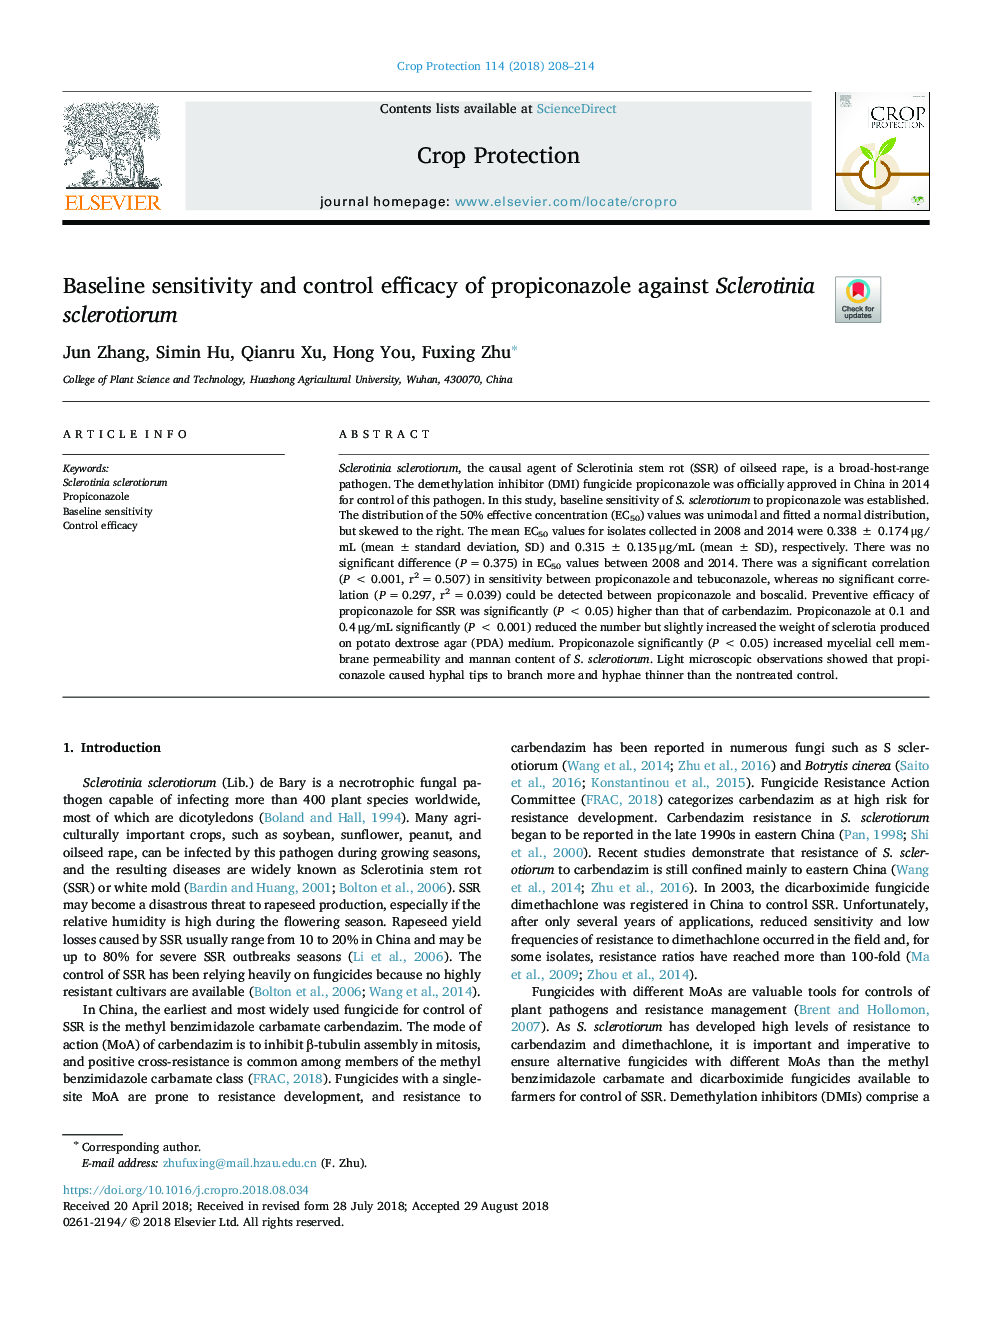 Baseline sensitivity and control efficacy of propiconazole against Sclerotinia sclerotiorum